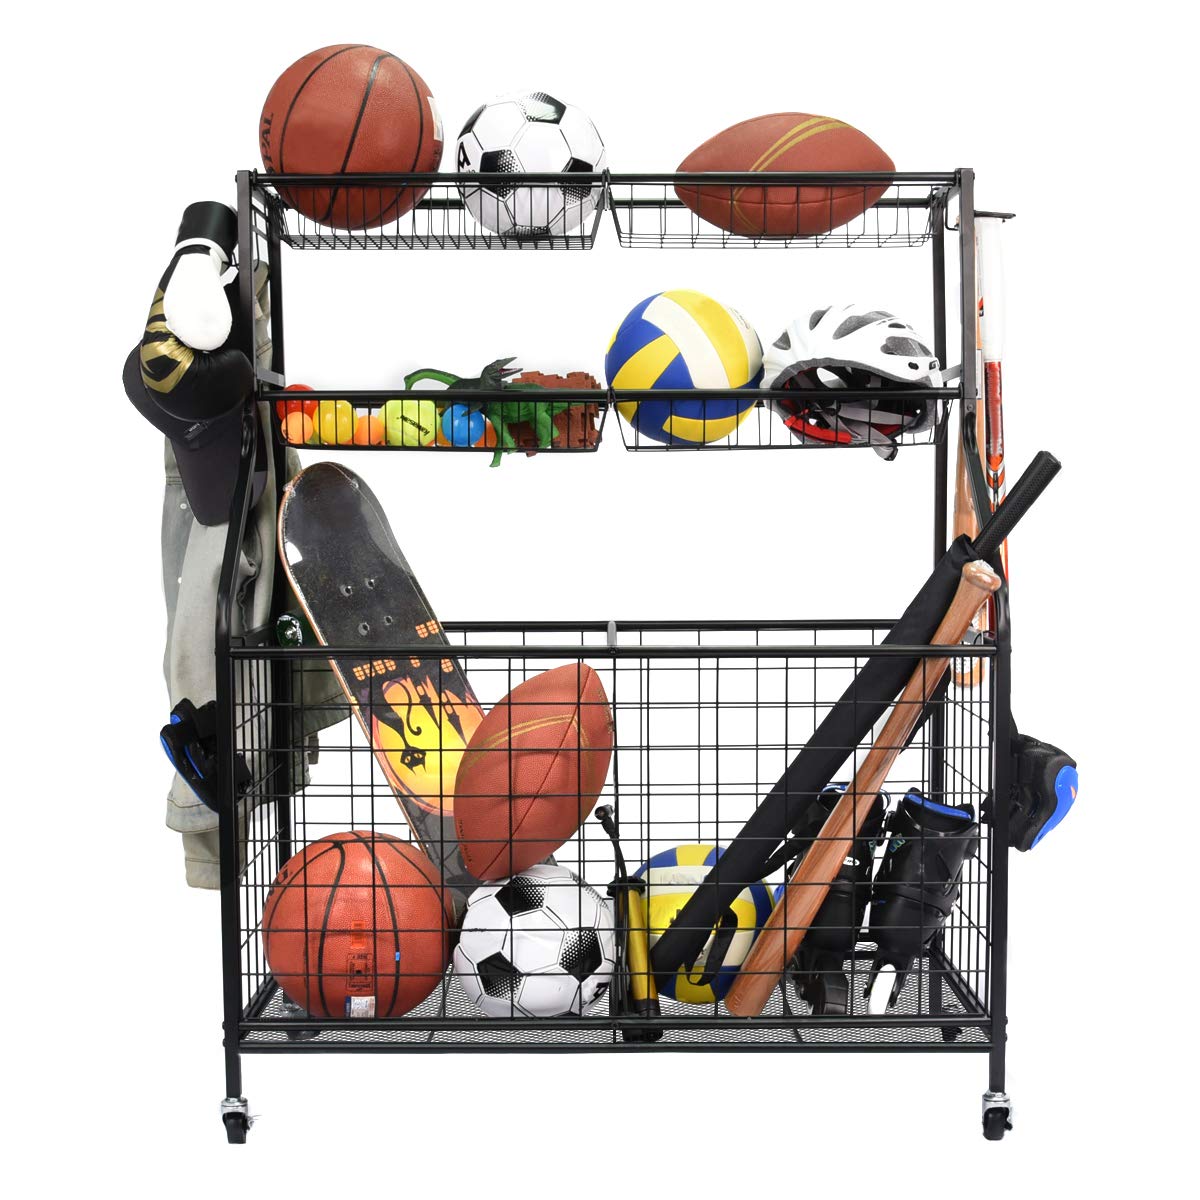 Kinghouse Garage Sports Equipment Organizer, Ball Storage Rack, Garage Ball Storage, Sports Gear Storage, Garage Organizer with Baskets and Hooks, Rolling Sports Ball Storage Cart, Black, Steel